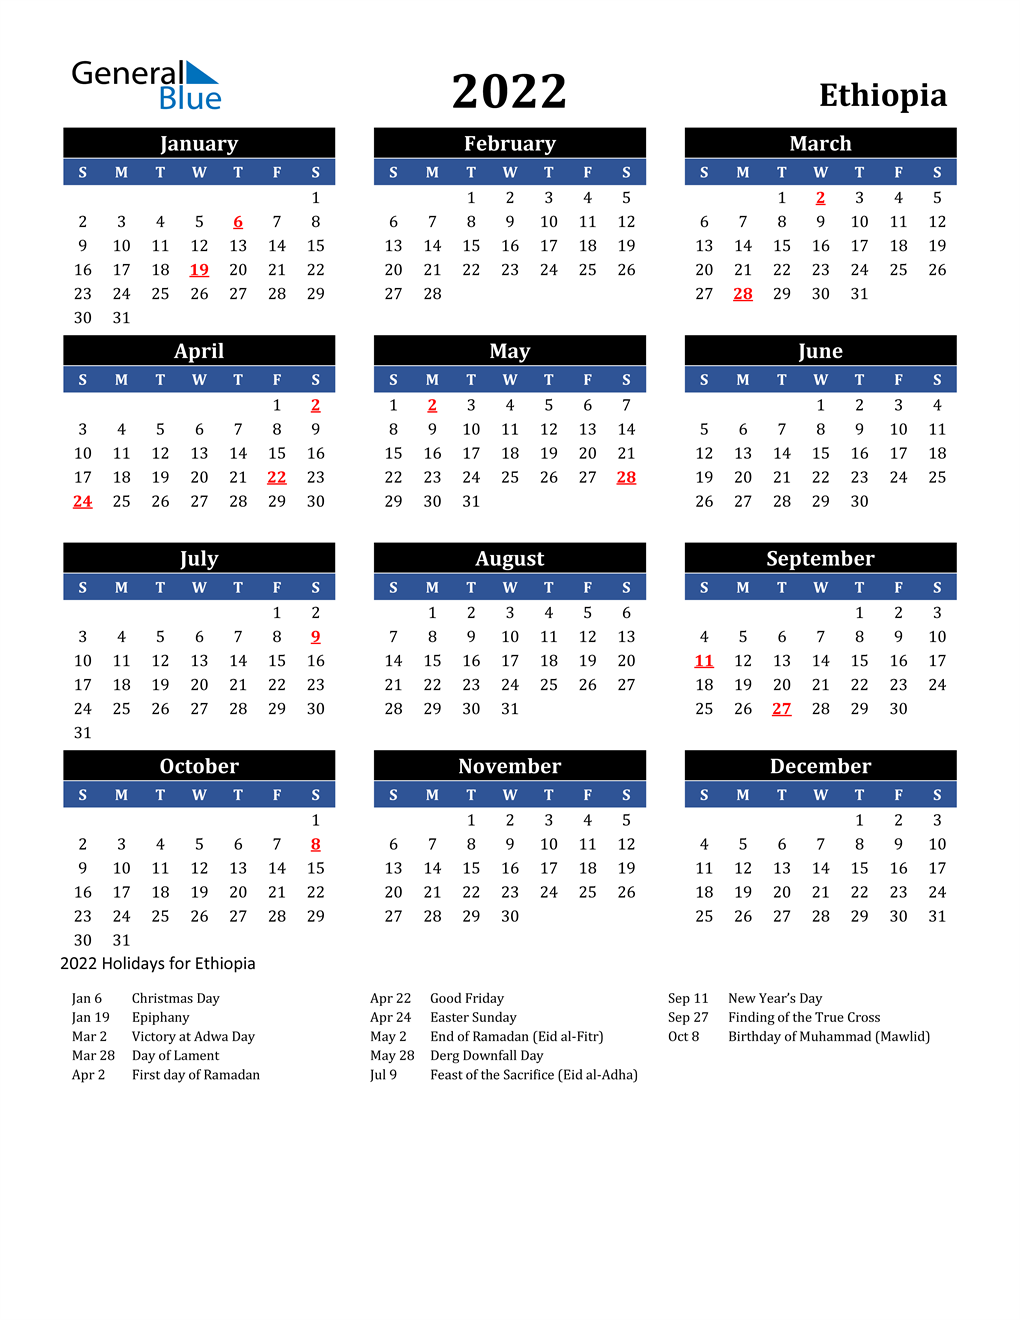 Ethiopian Fasting Calendar 2022 2022 Ethiopia Calendar With Holidays